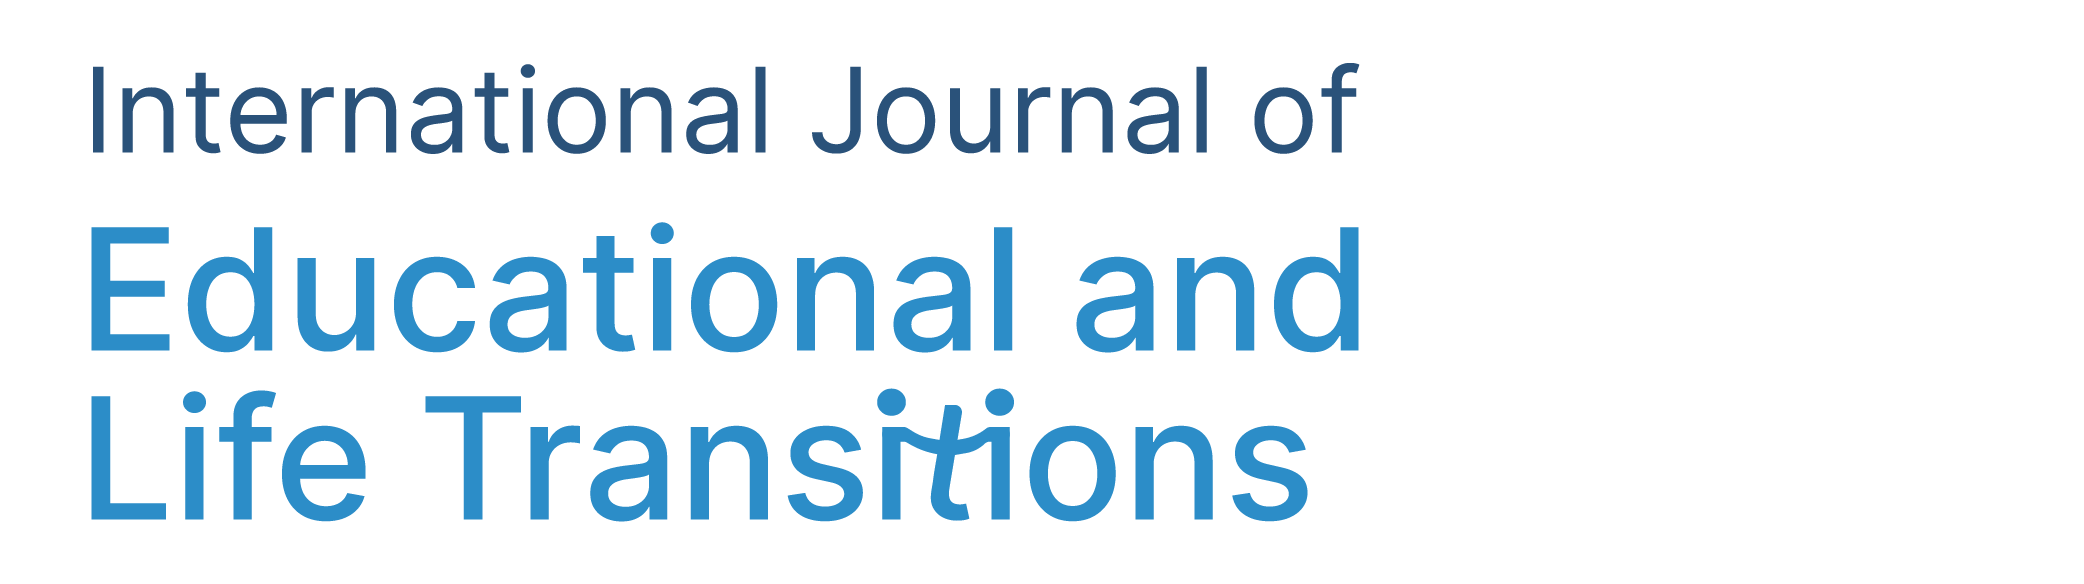 IJELT journal logo